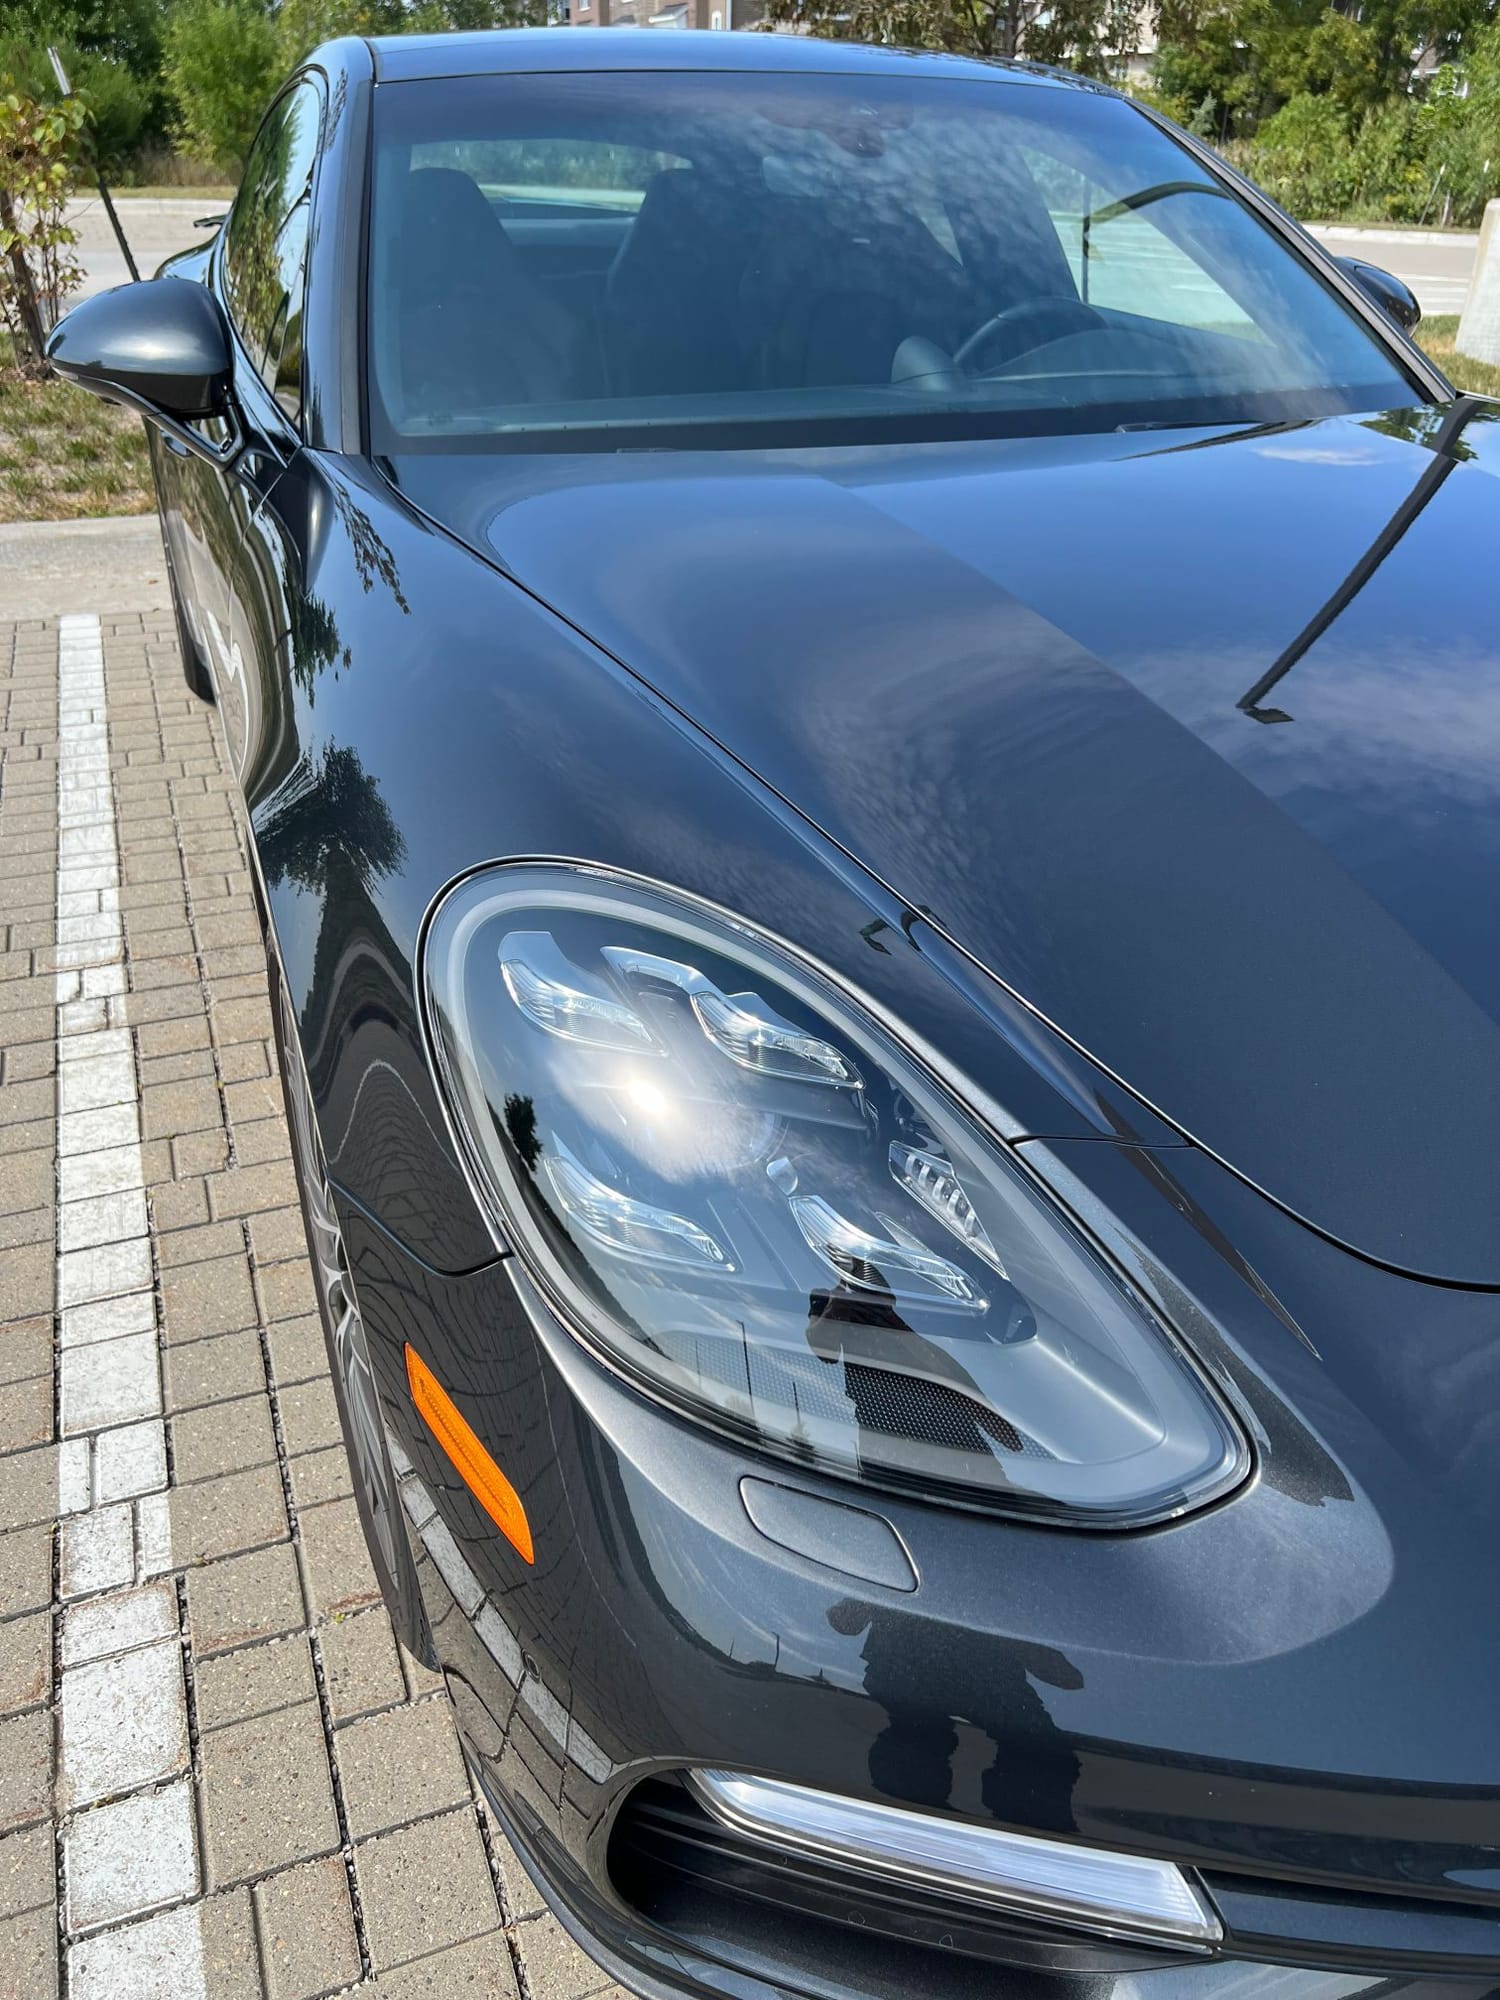 2017 Porsche Panamera - 2017 Porsche Panamera Turbo w/CPO Warranty - Used - VIN WP0AF2A71HL153555 - 45,650 Miles - 8 cyl - AWD - Automatic - Sedan - Gray - Coralville, IA 52241, United States